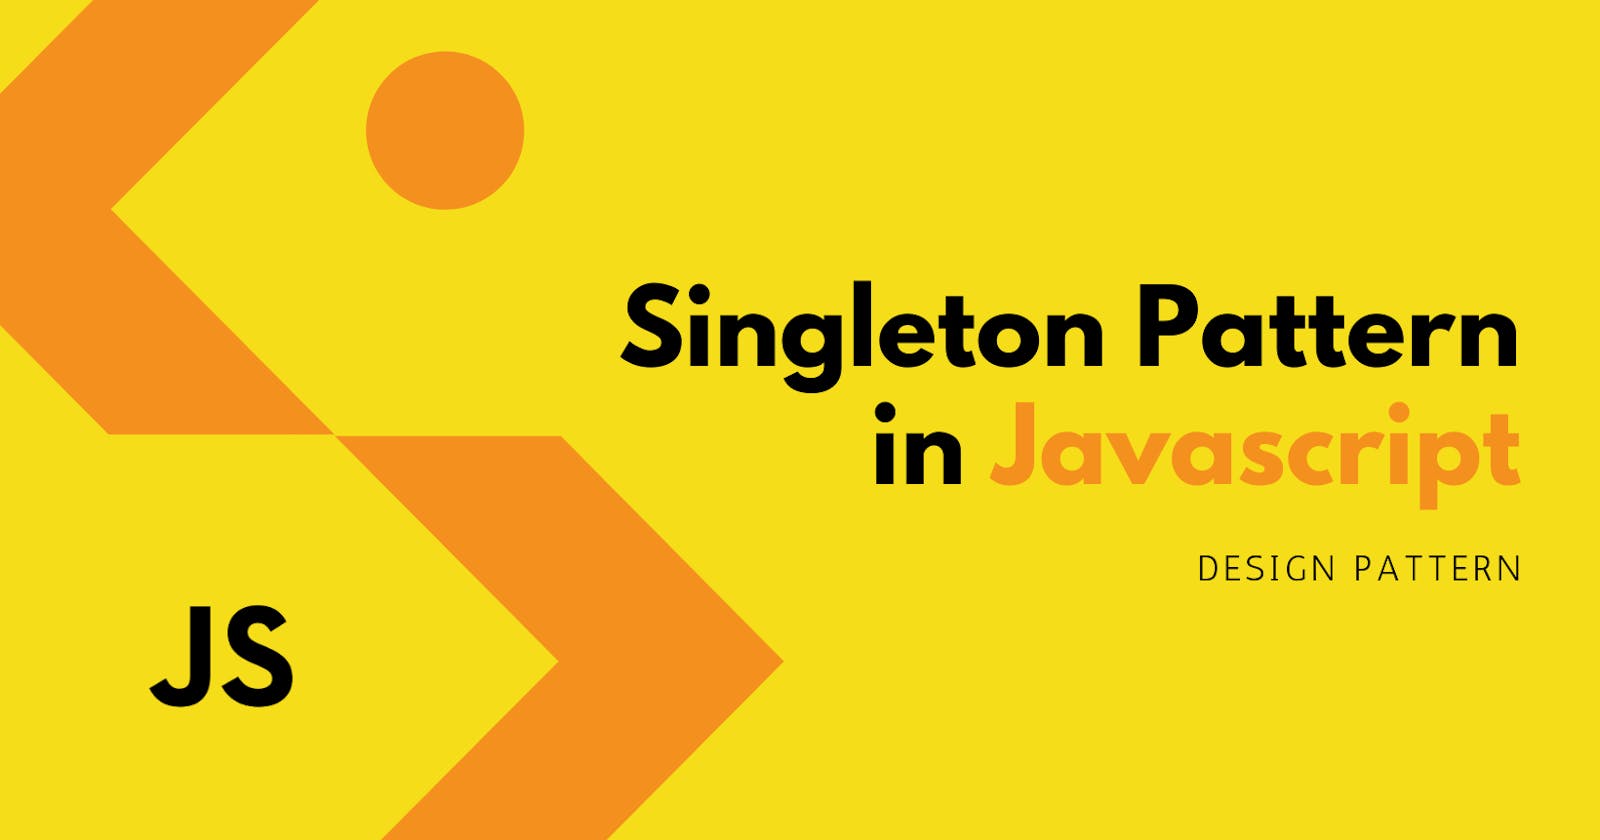 Singleton Pattern in Javascript